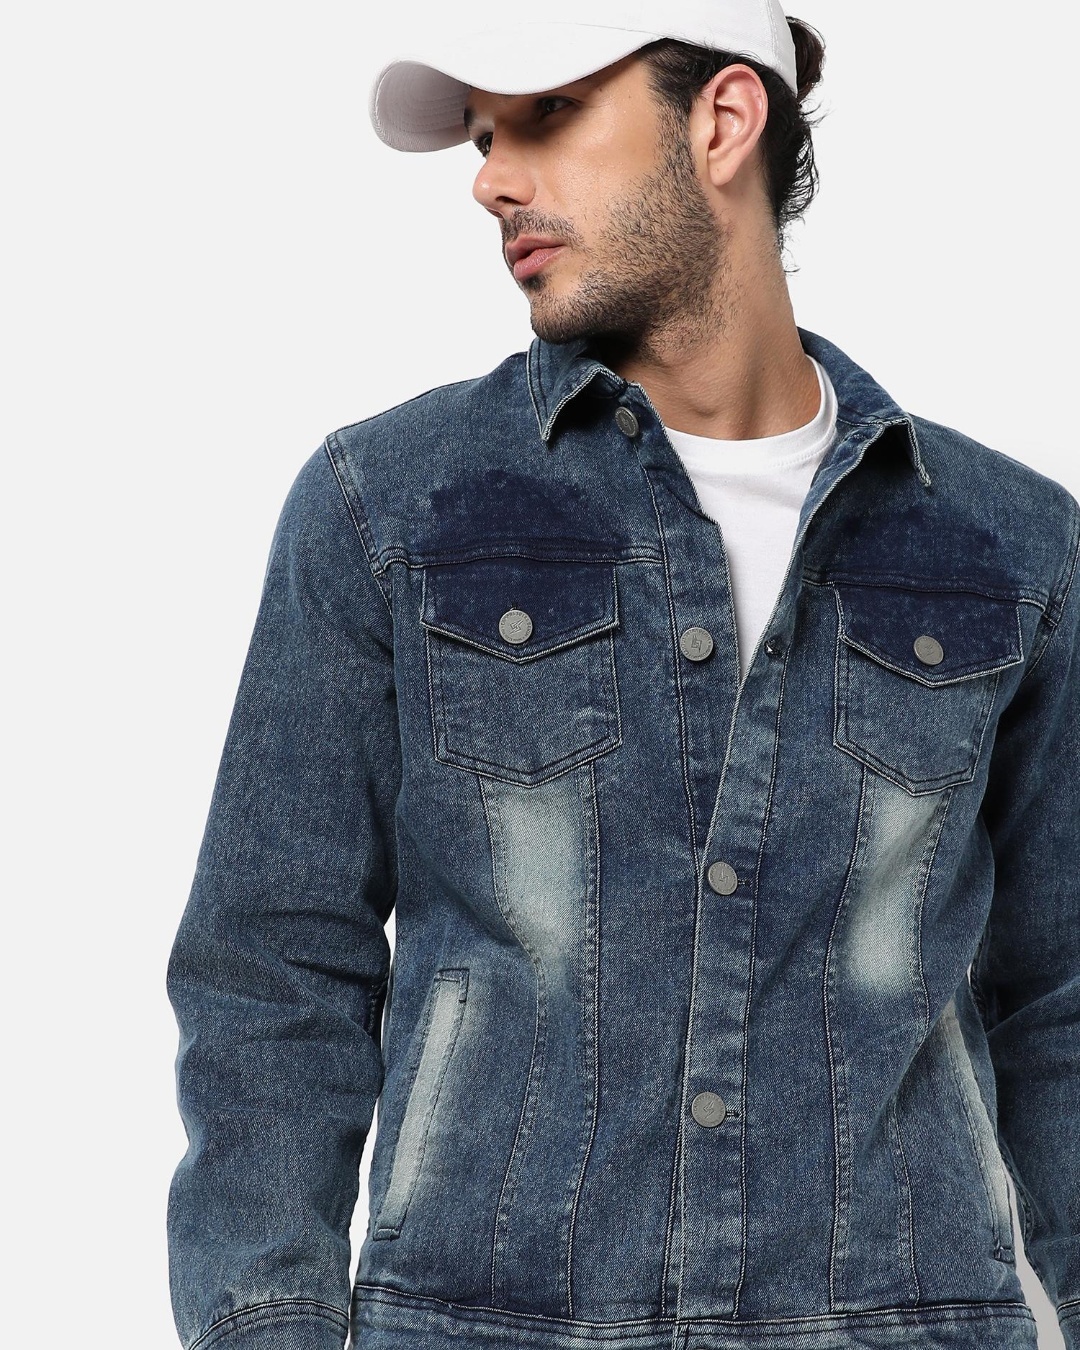 Buy Urban Estilo Blue Washed Denim Jacket With Fur Online at Bewakoof